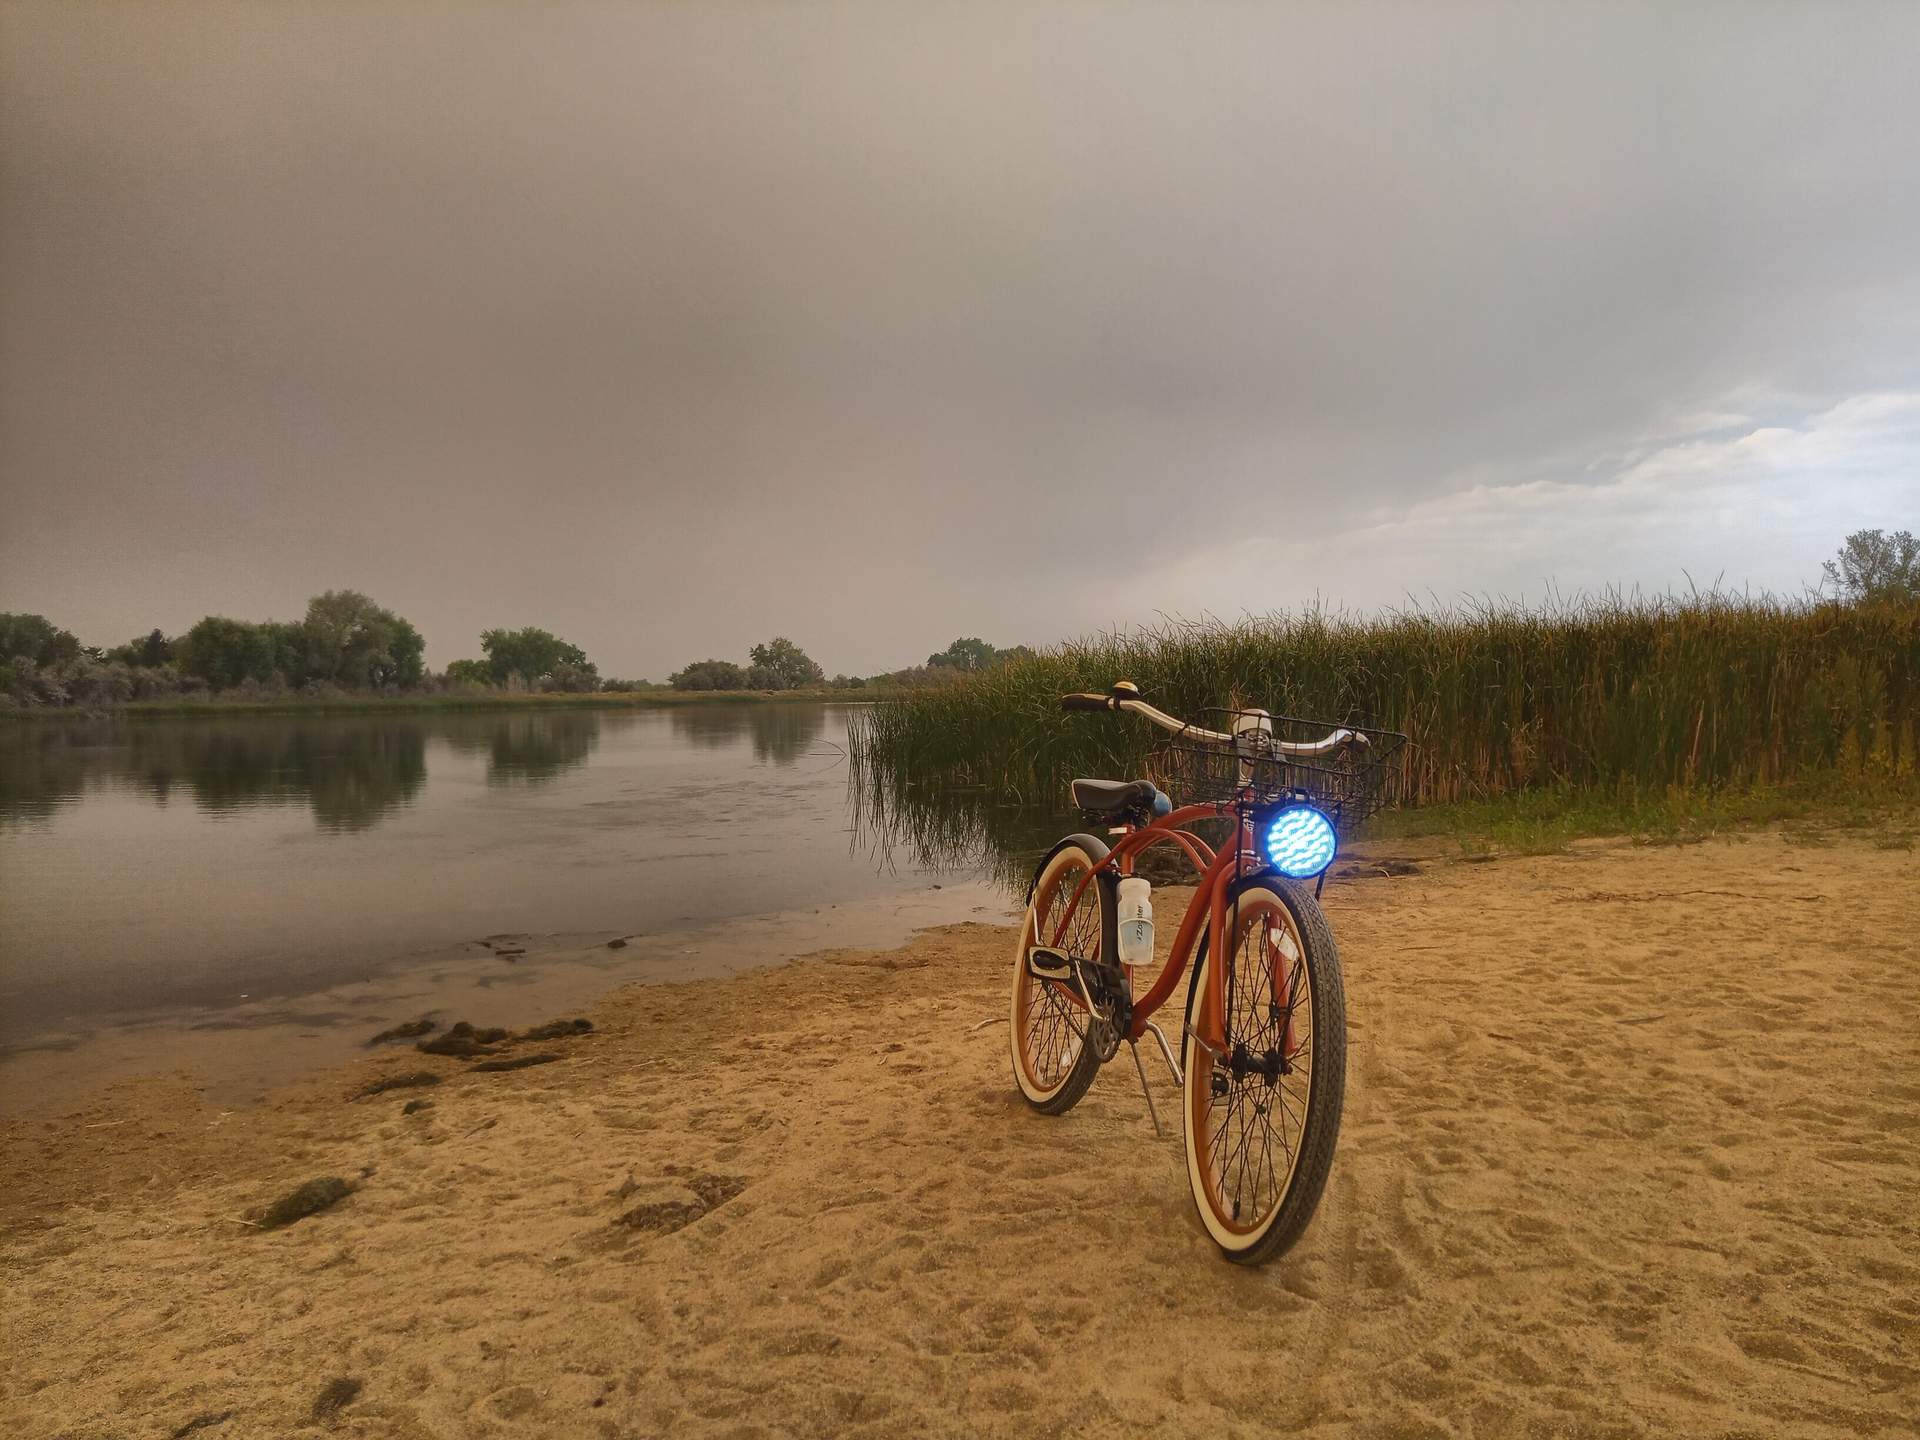 My Huffy Cranbrook cruiser bike at the neighborhood lake with dark smoke lingering above.